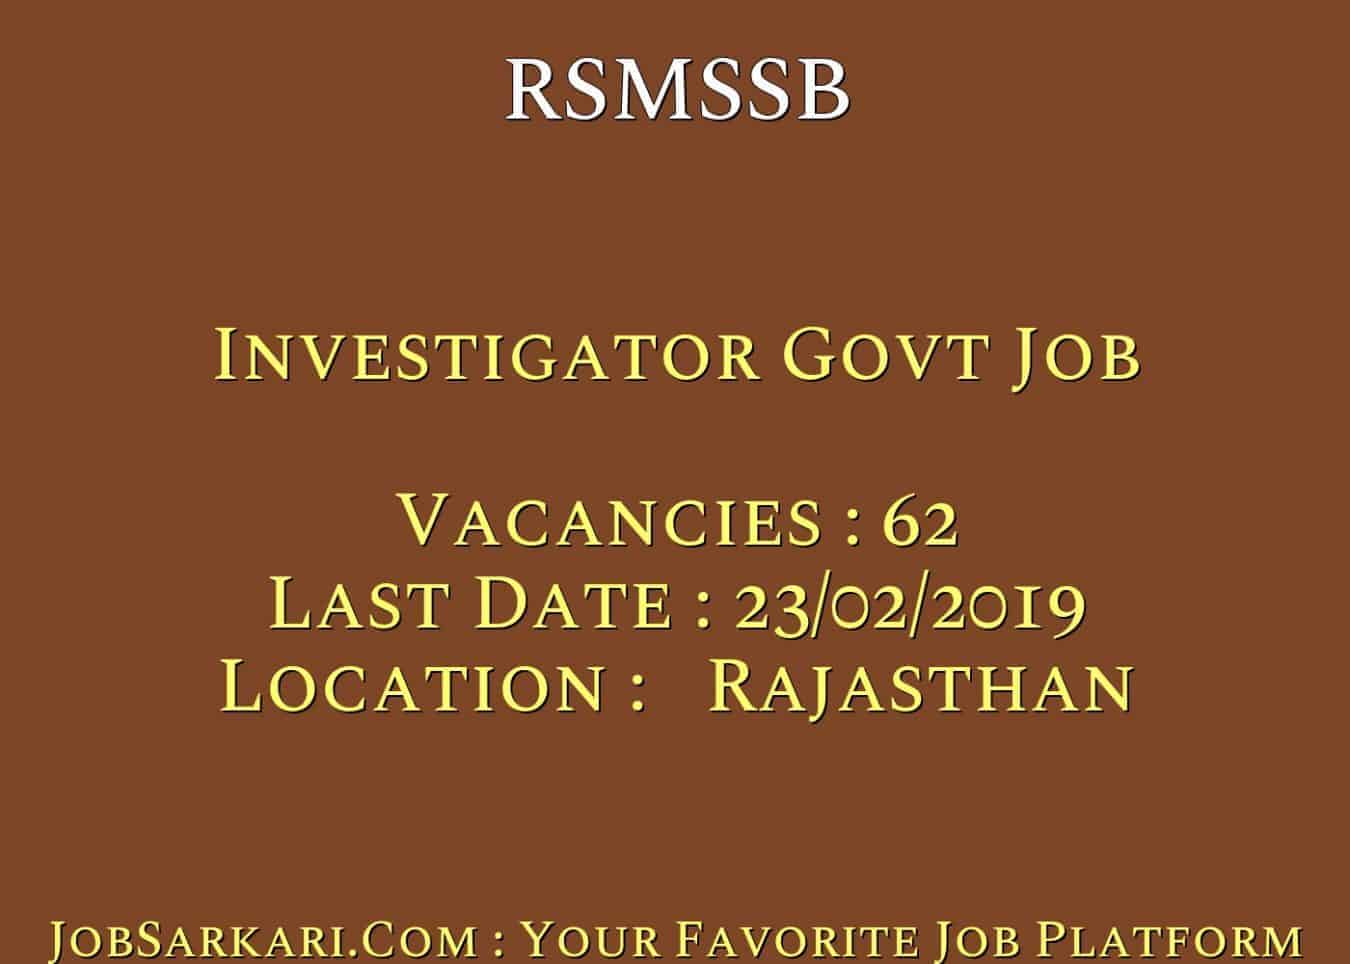 RSMSSB Recruitment 2019 For Investigator Govt Job